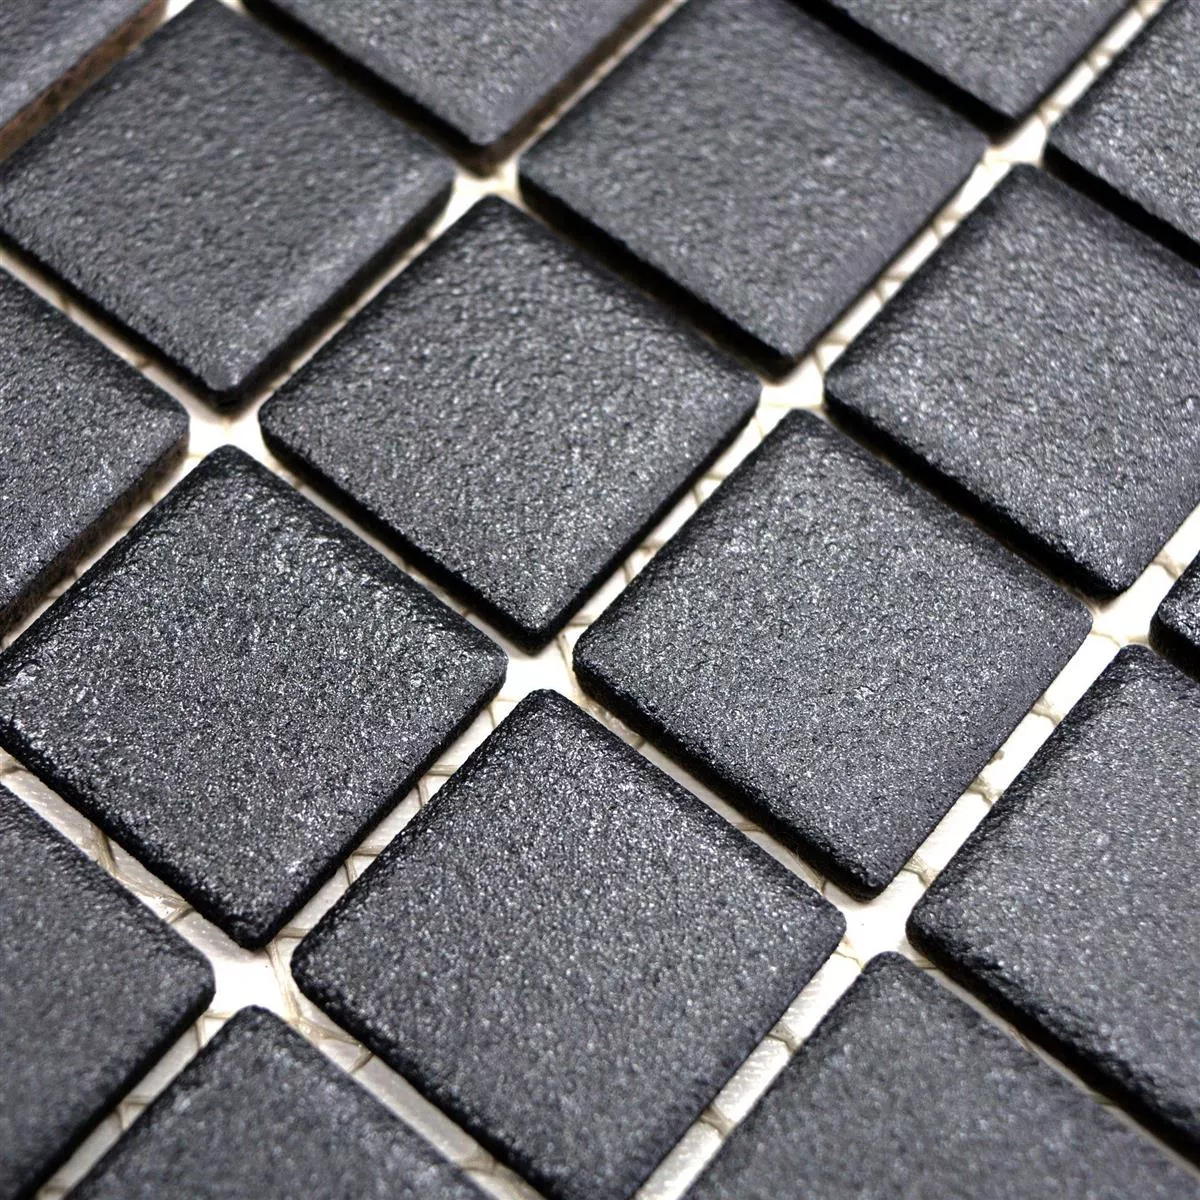 Ceramic Mosaic Tiles Pilamaya Black Non-Slip R10 Q25